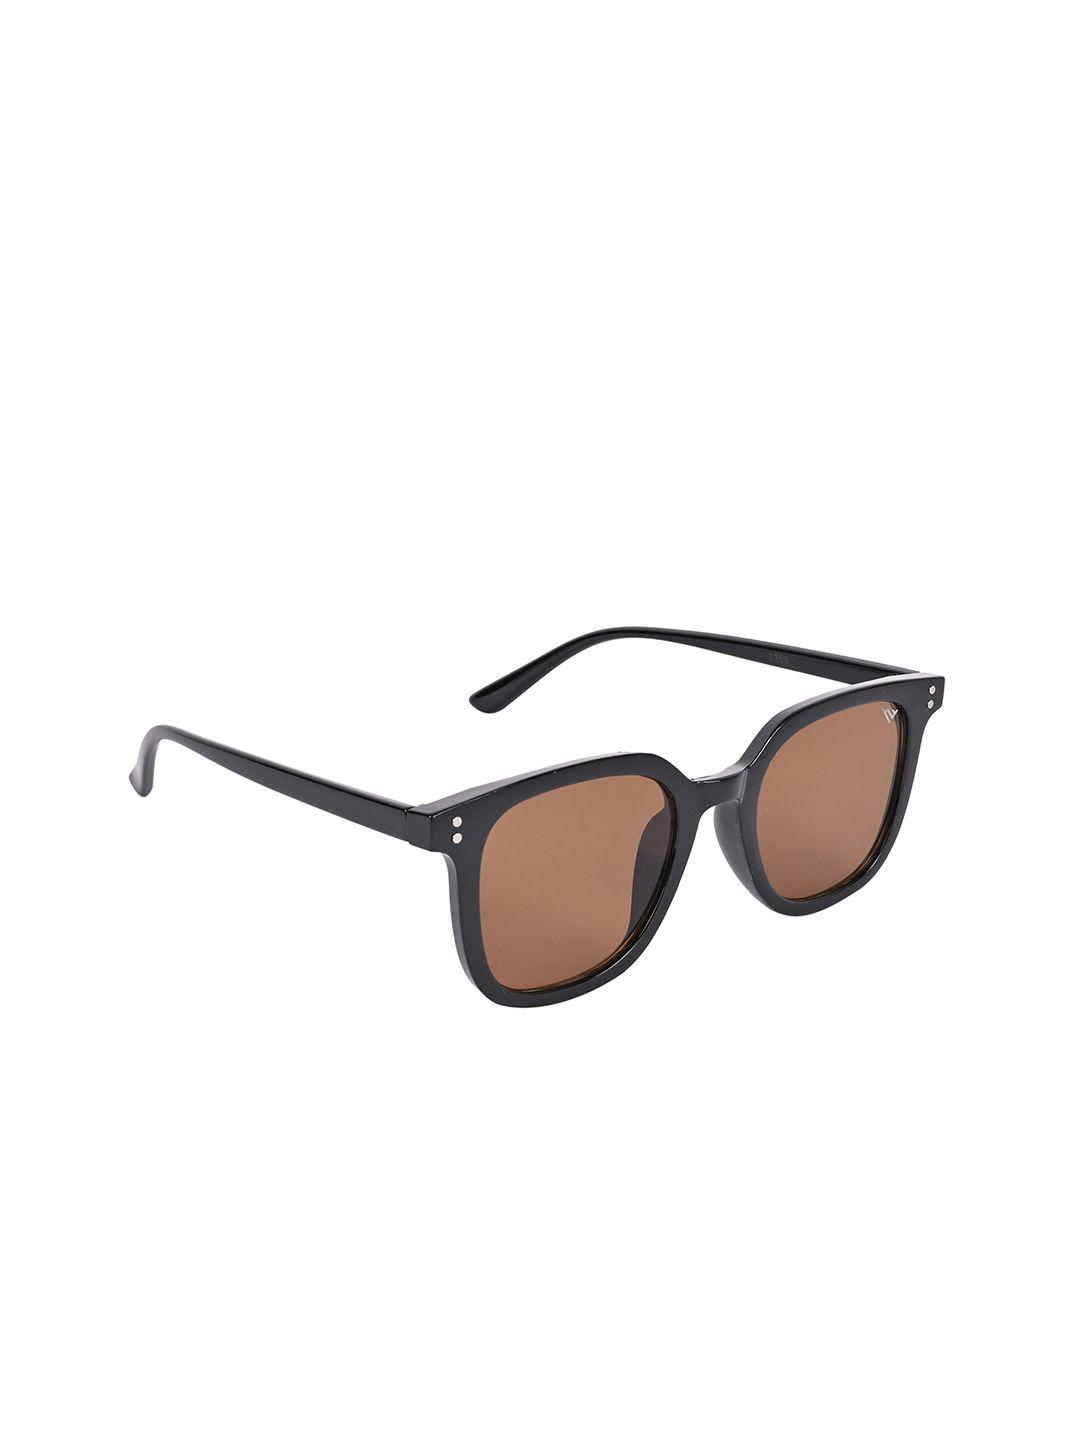 voyage unisex brown lens & black wayfarer sunglasses with uv protected lens